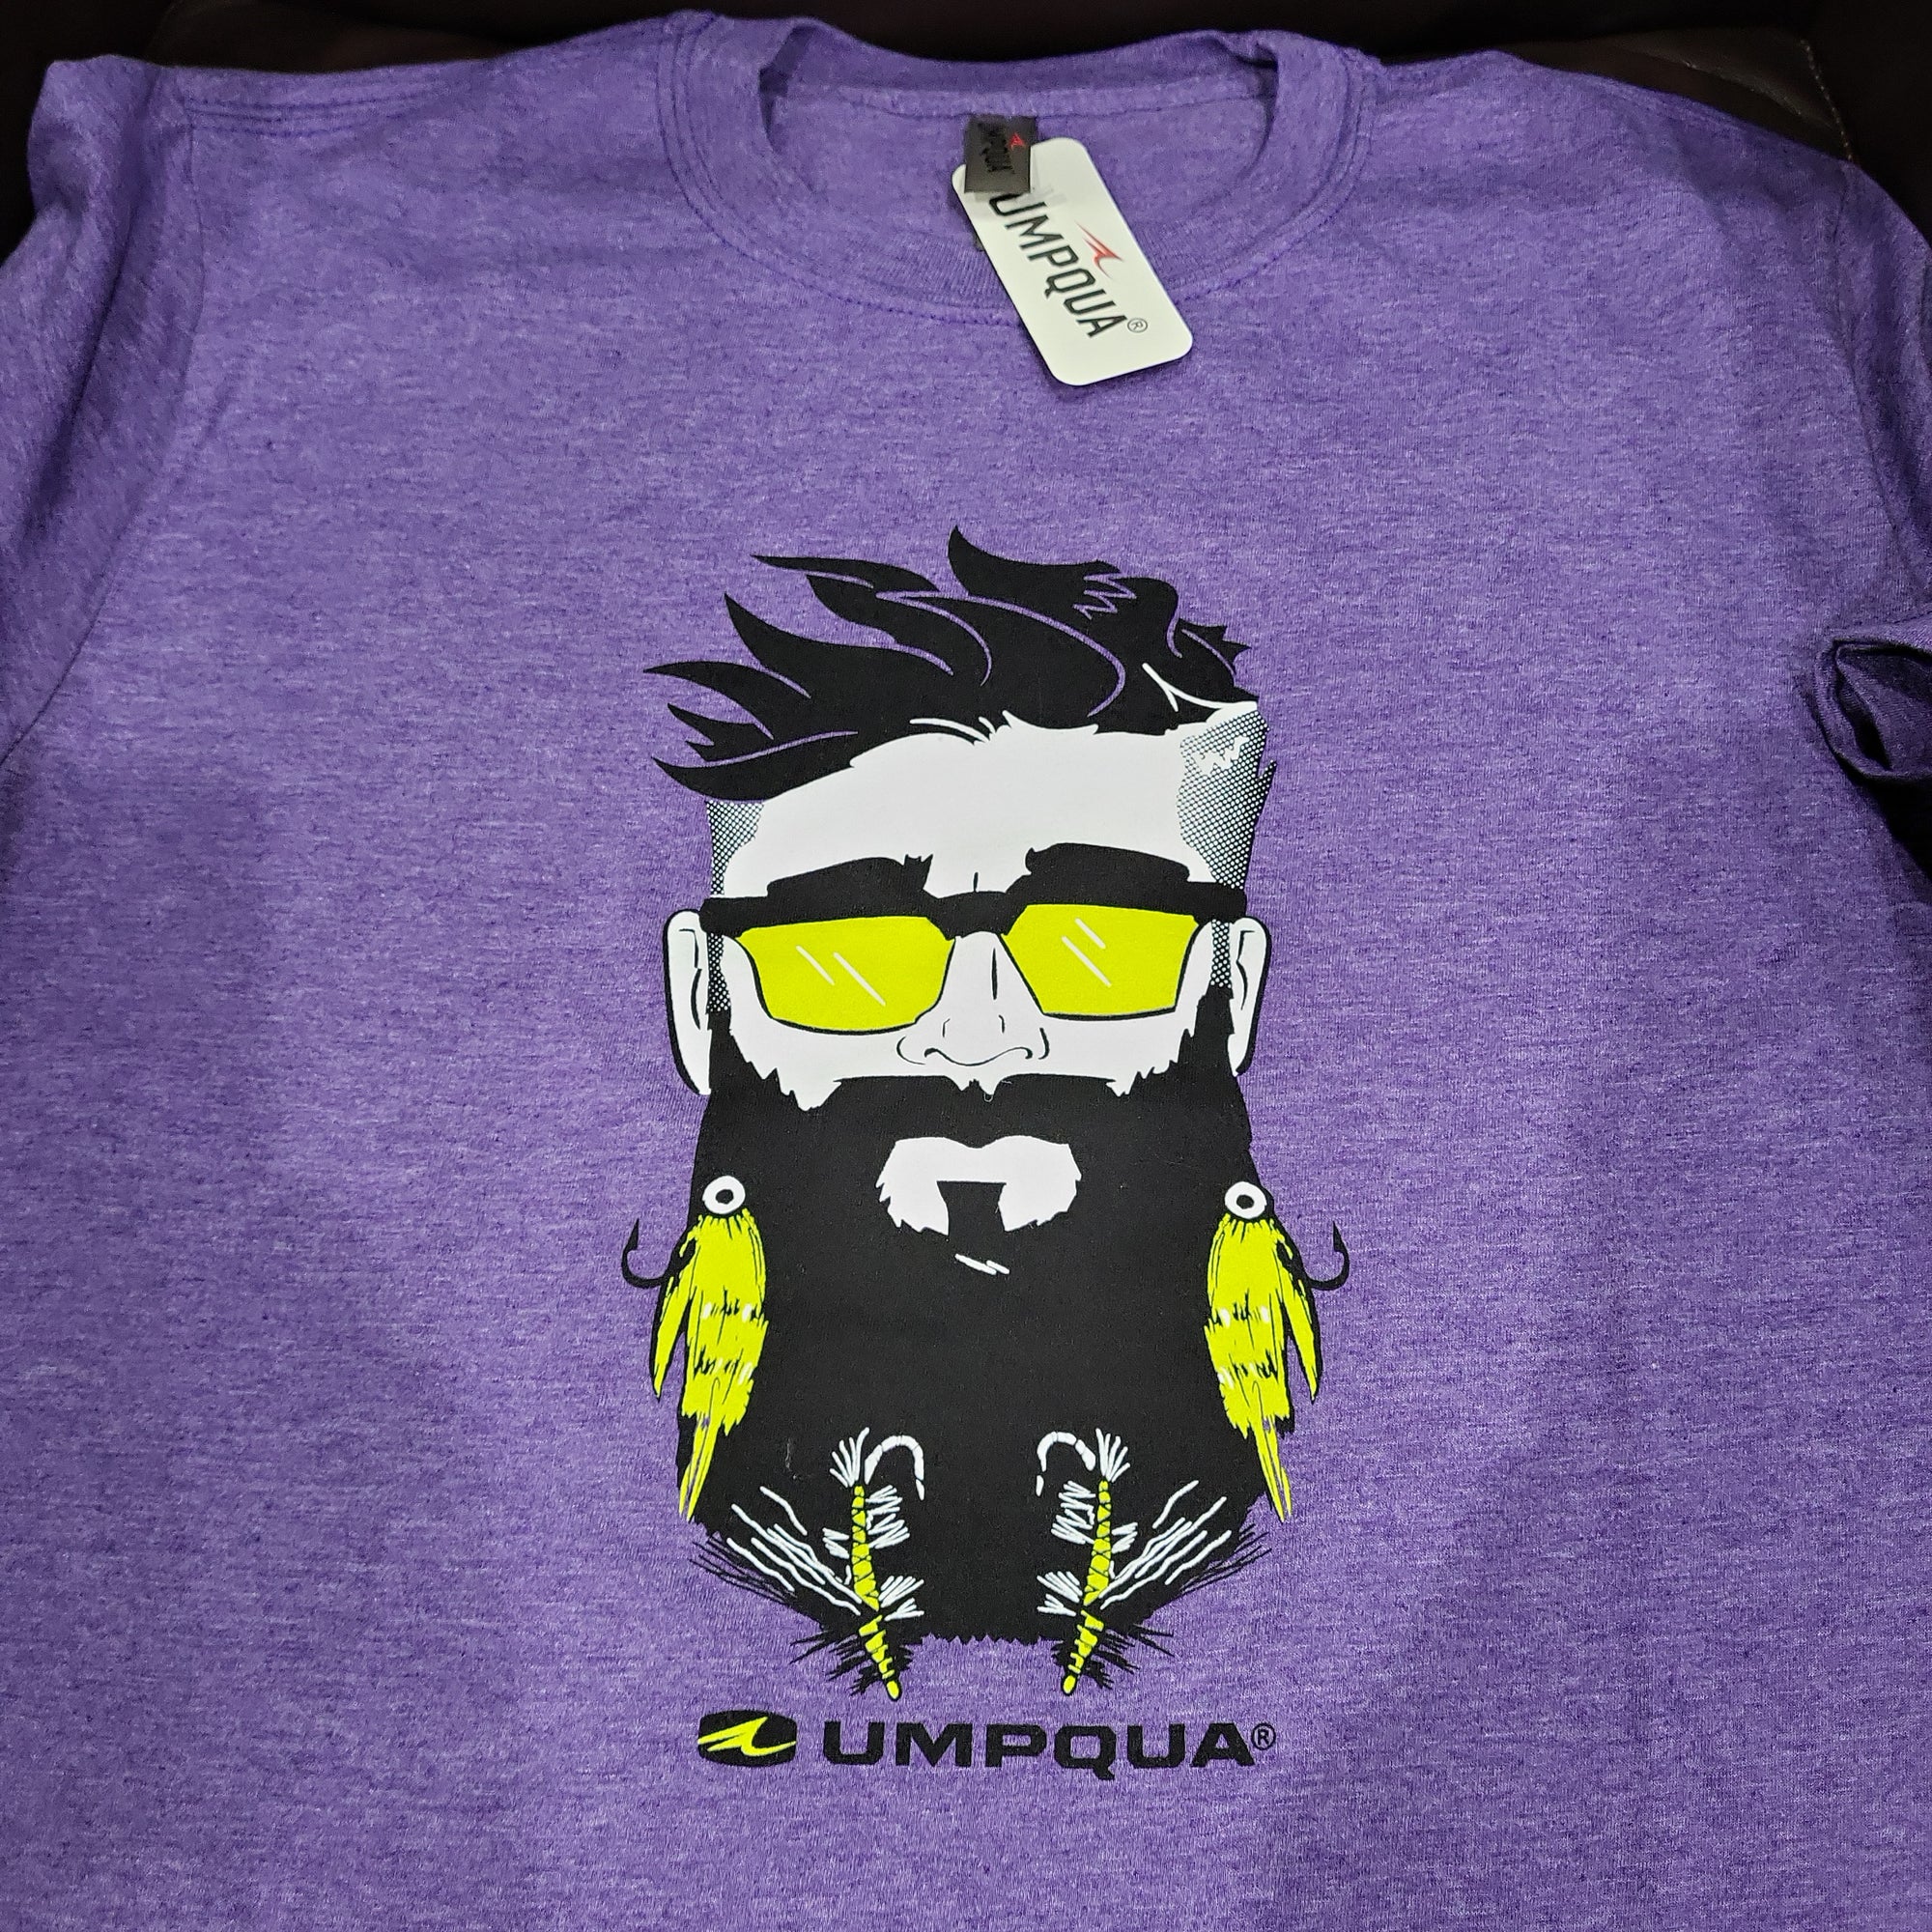 Umpqua Vintage Sheer T Shirt